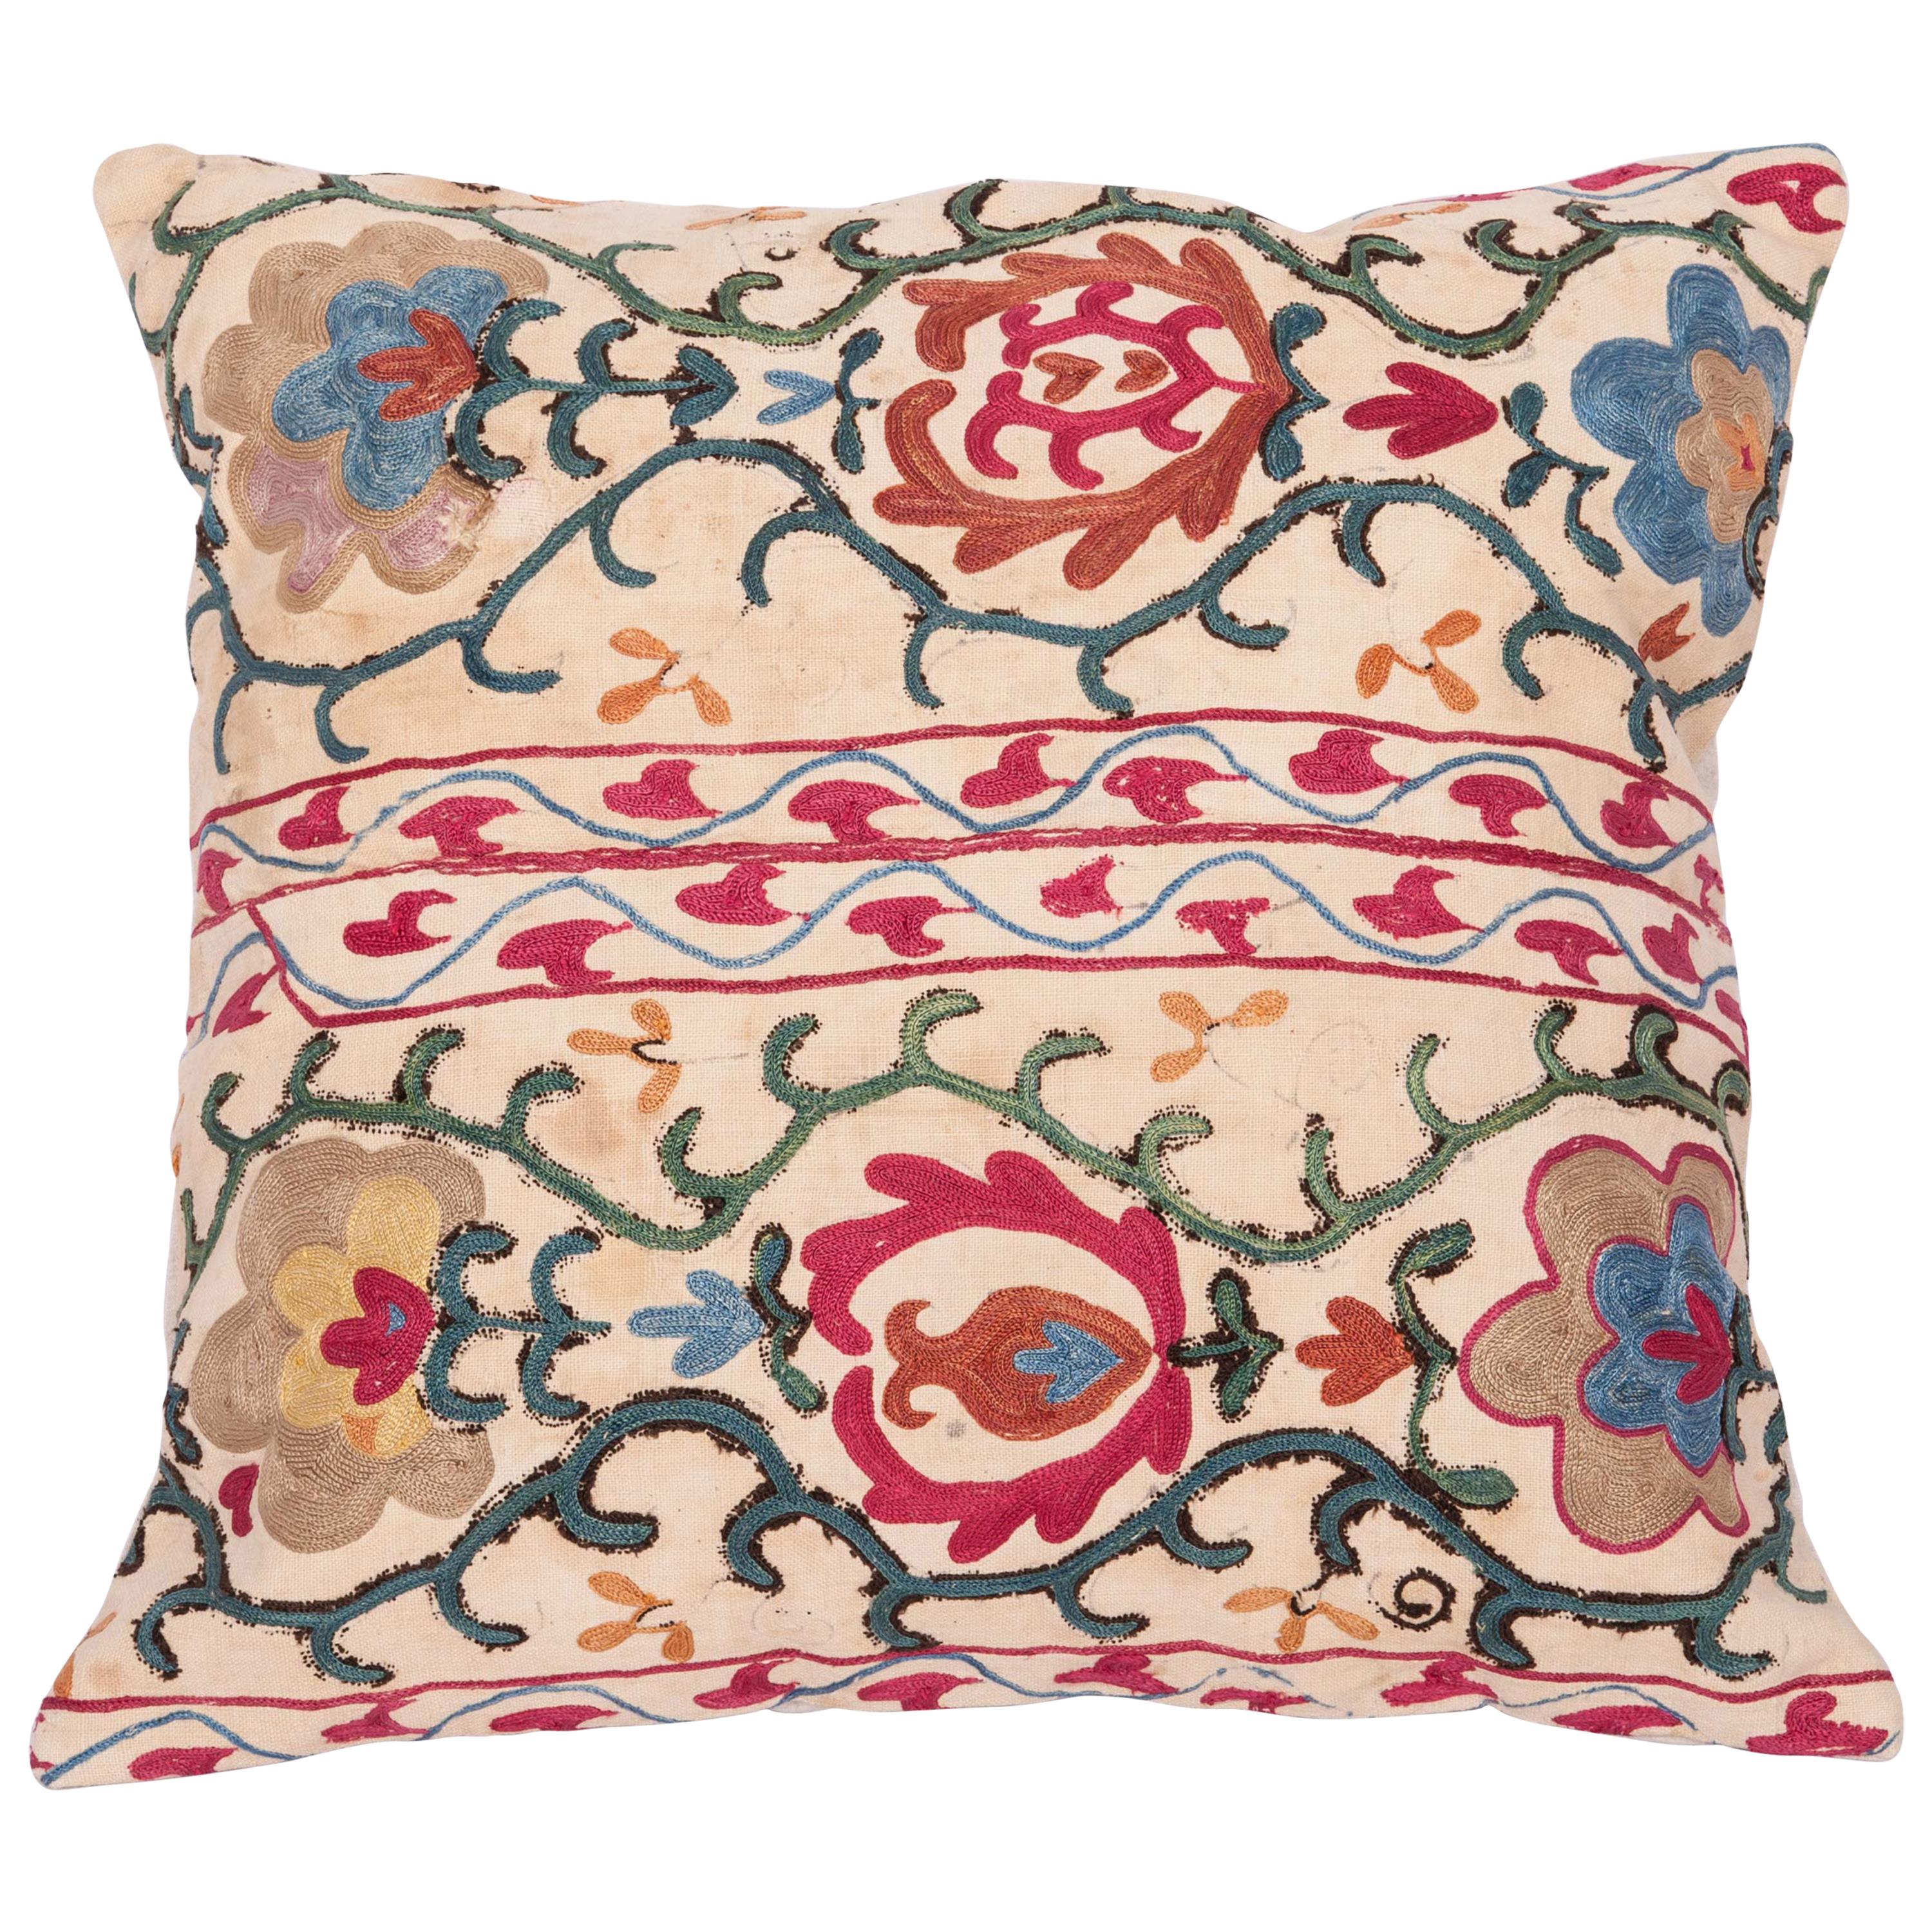 Antique Suzani Pillow Fashioned from a 19th Century Uzbek Suzani